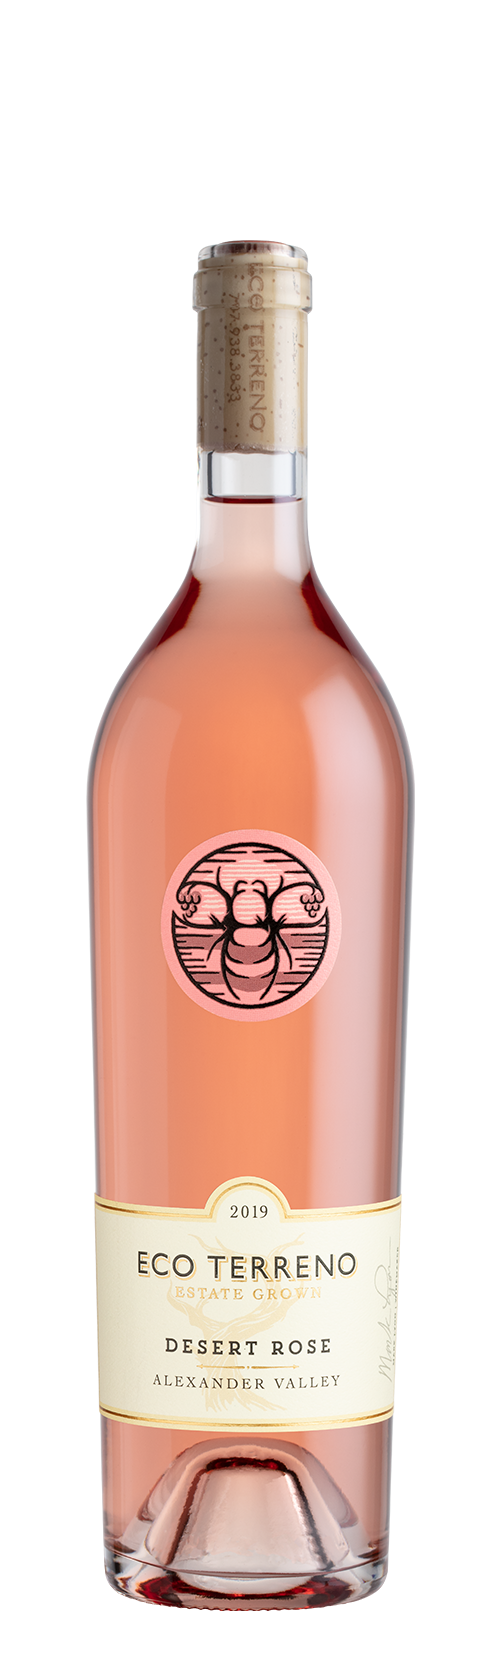 Bottle of Eco Terreno Rose